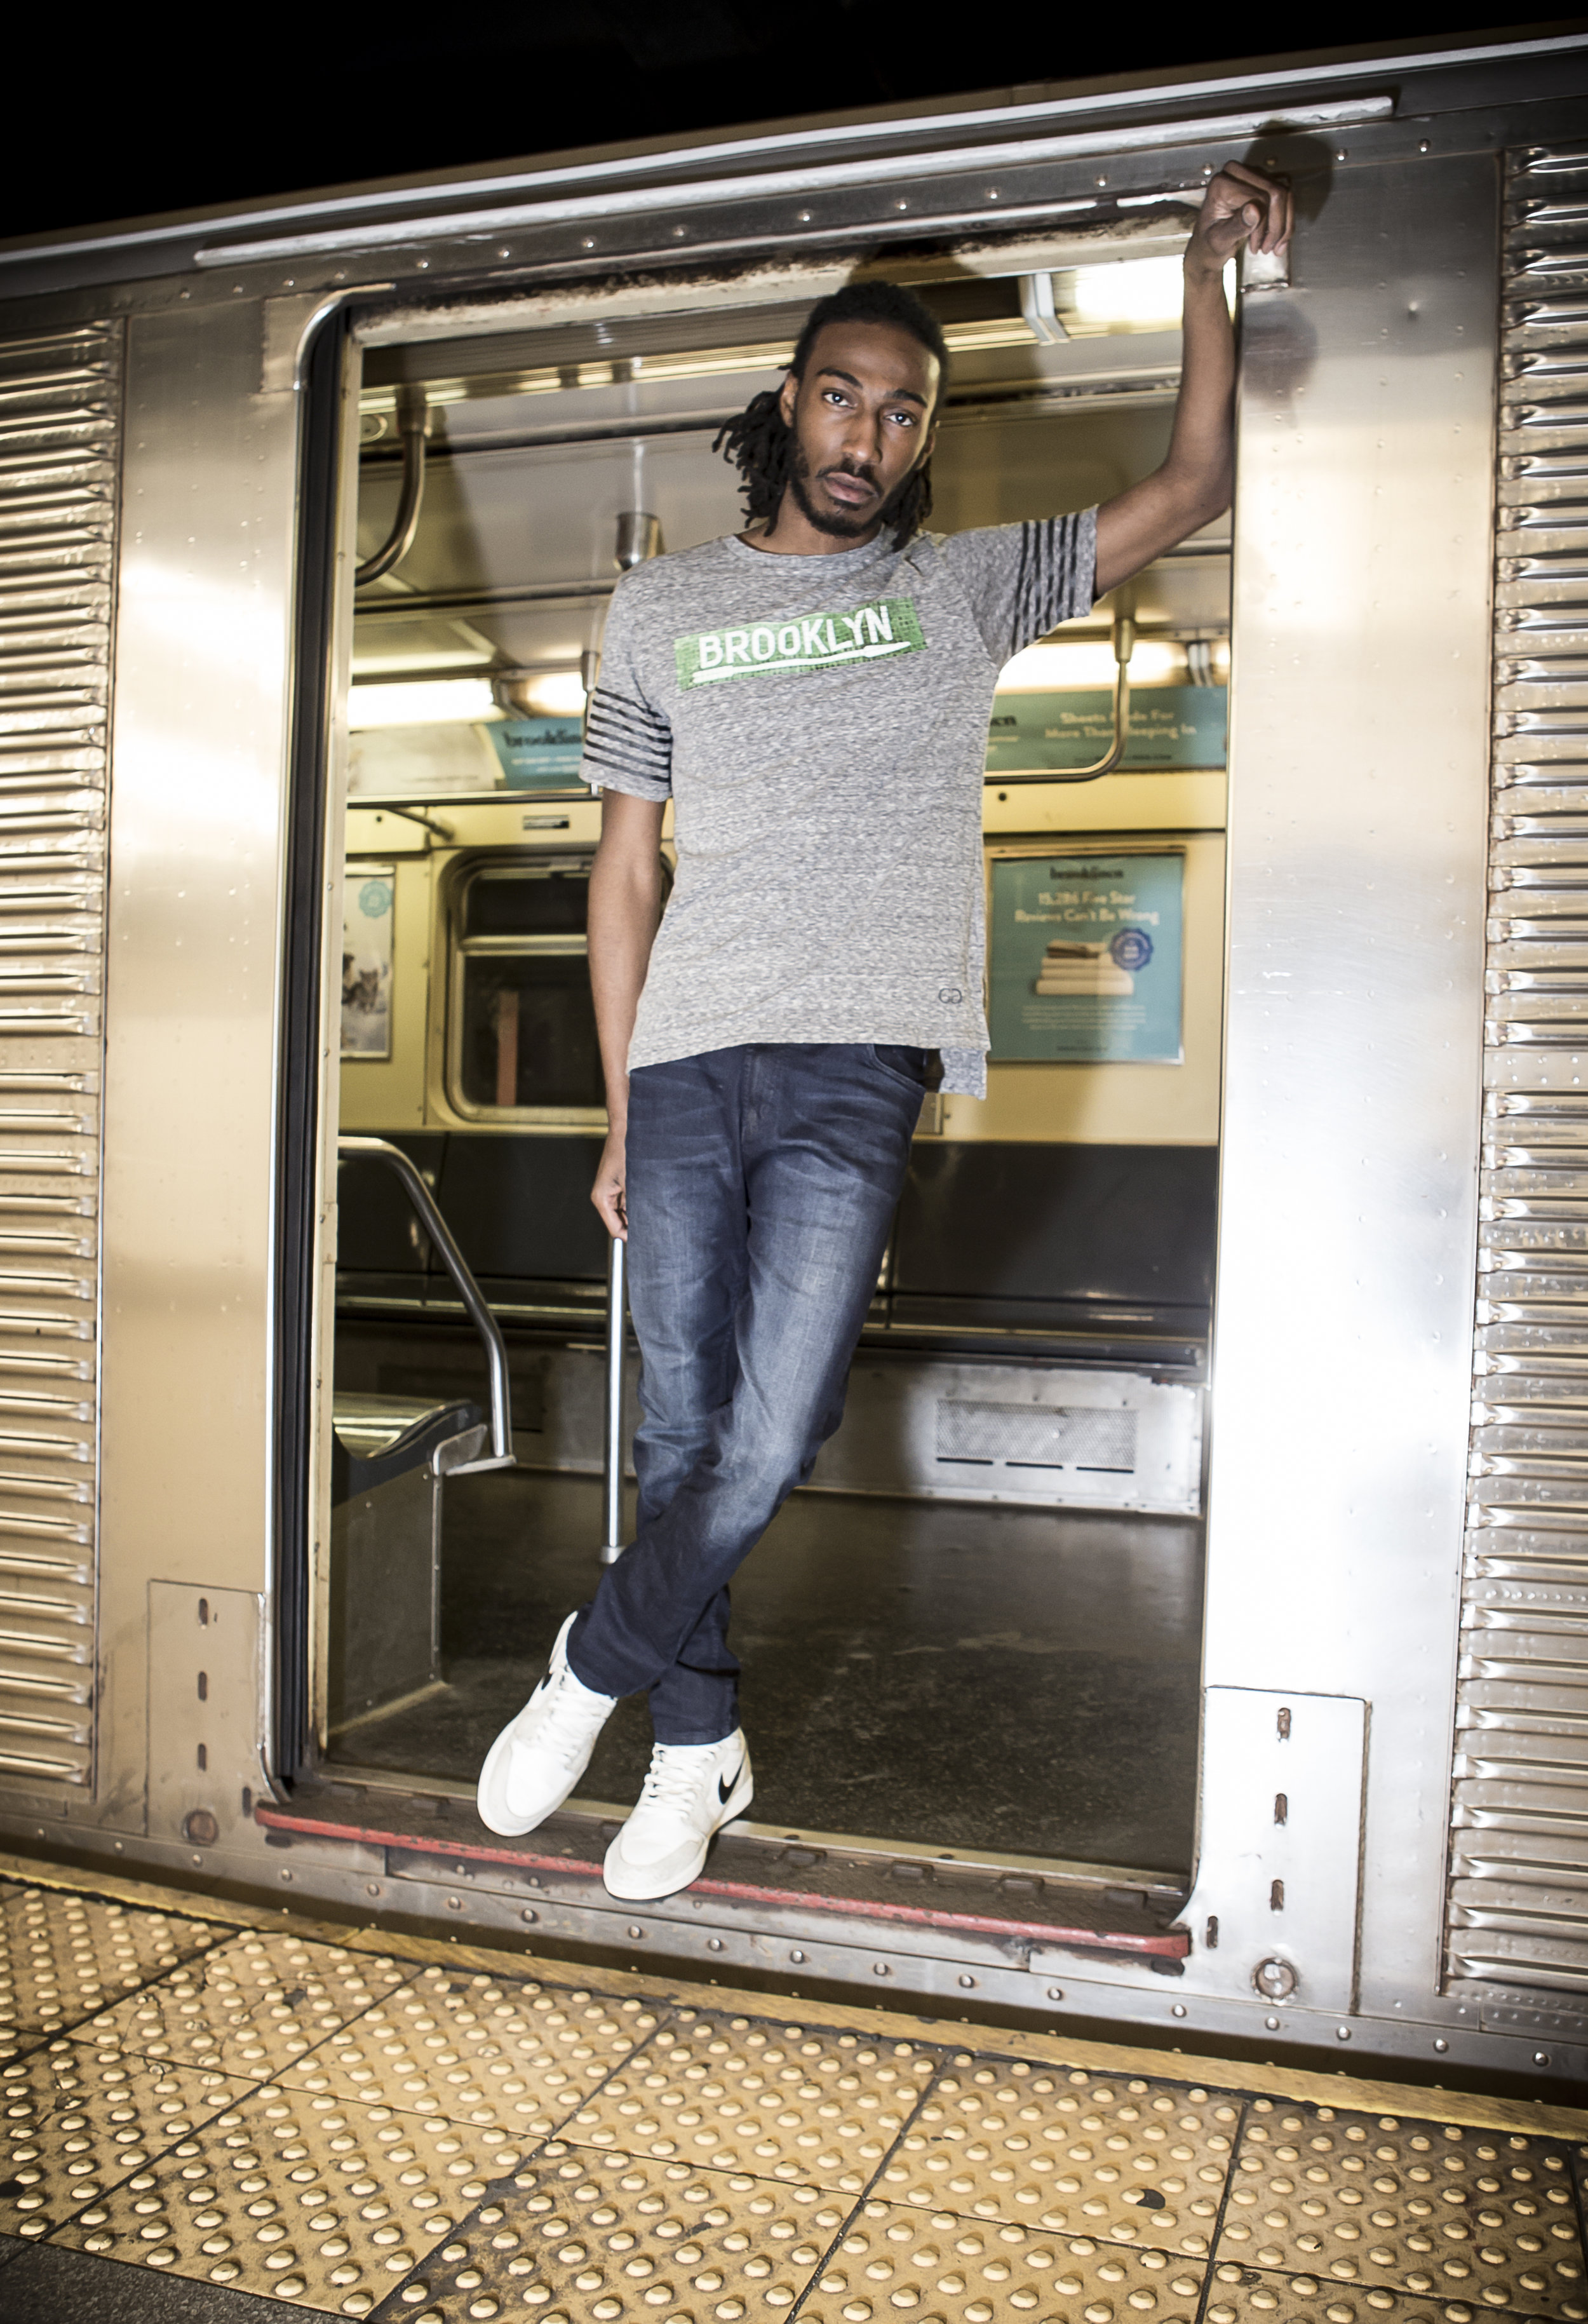 Grungy Gentleman x Subway Tile Shirts 15.JPG